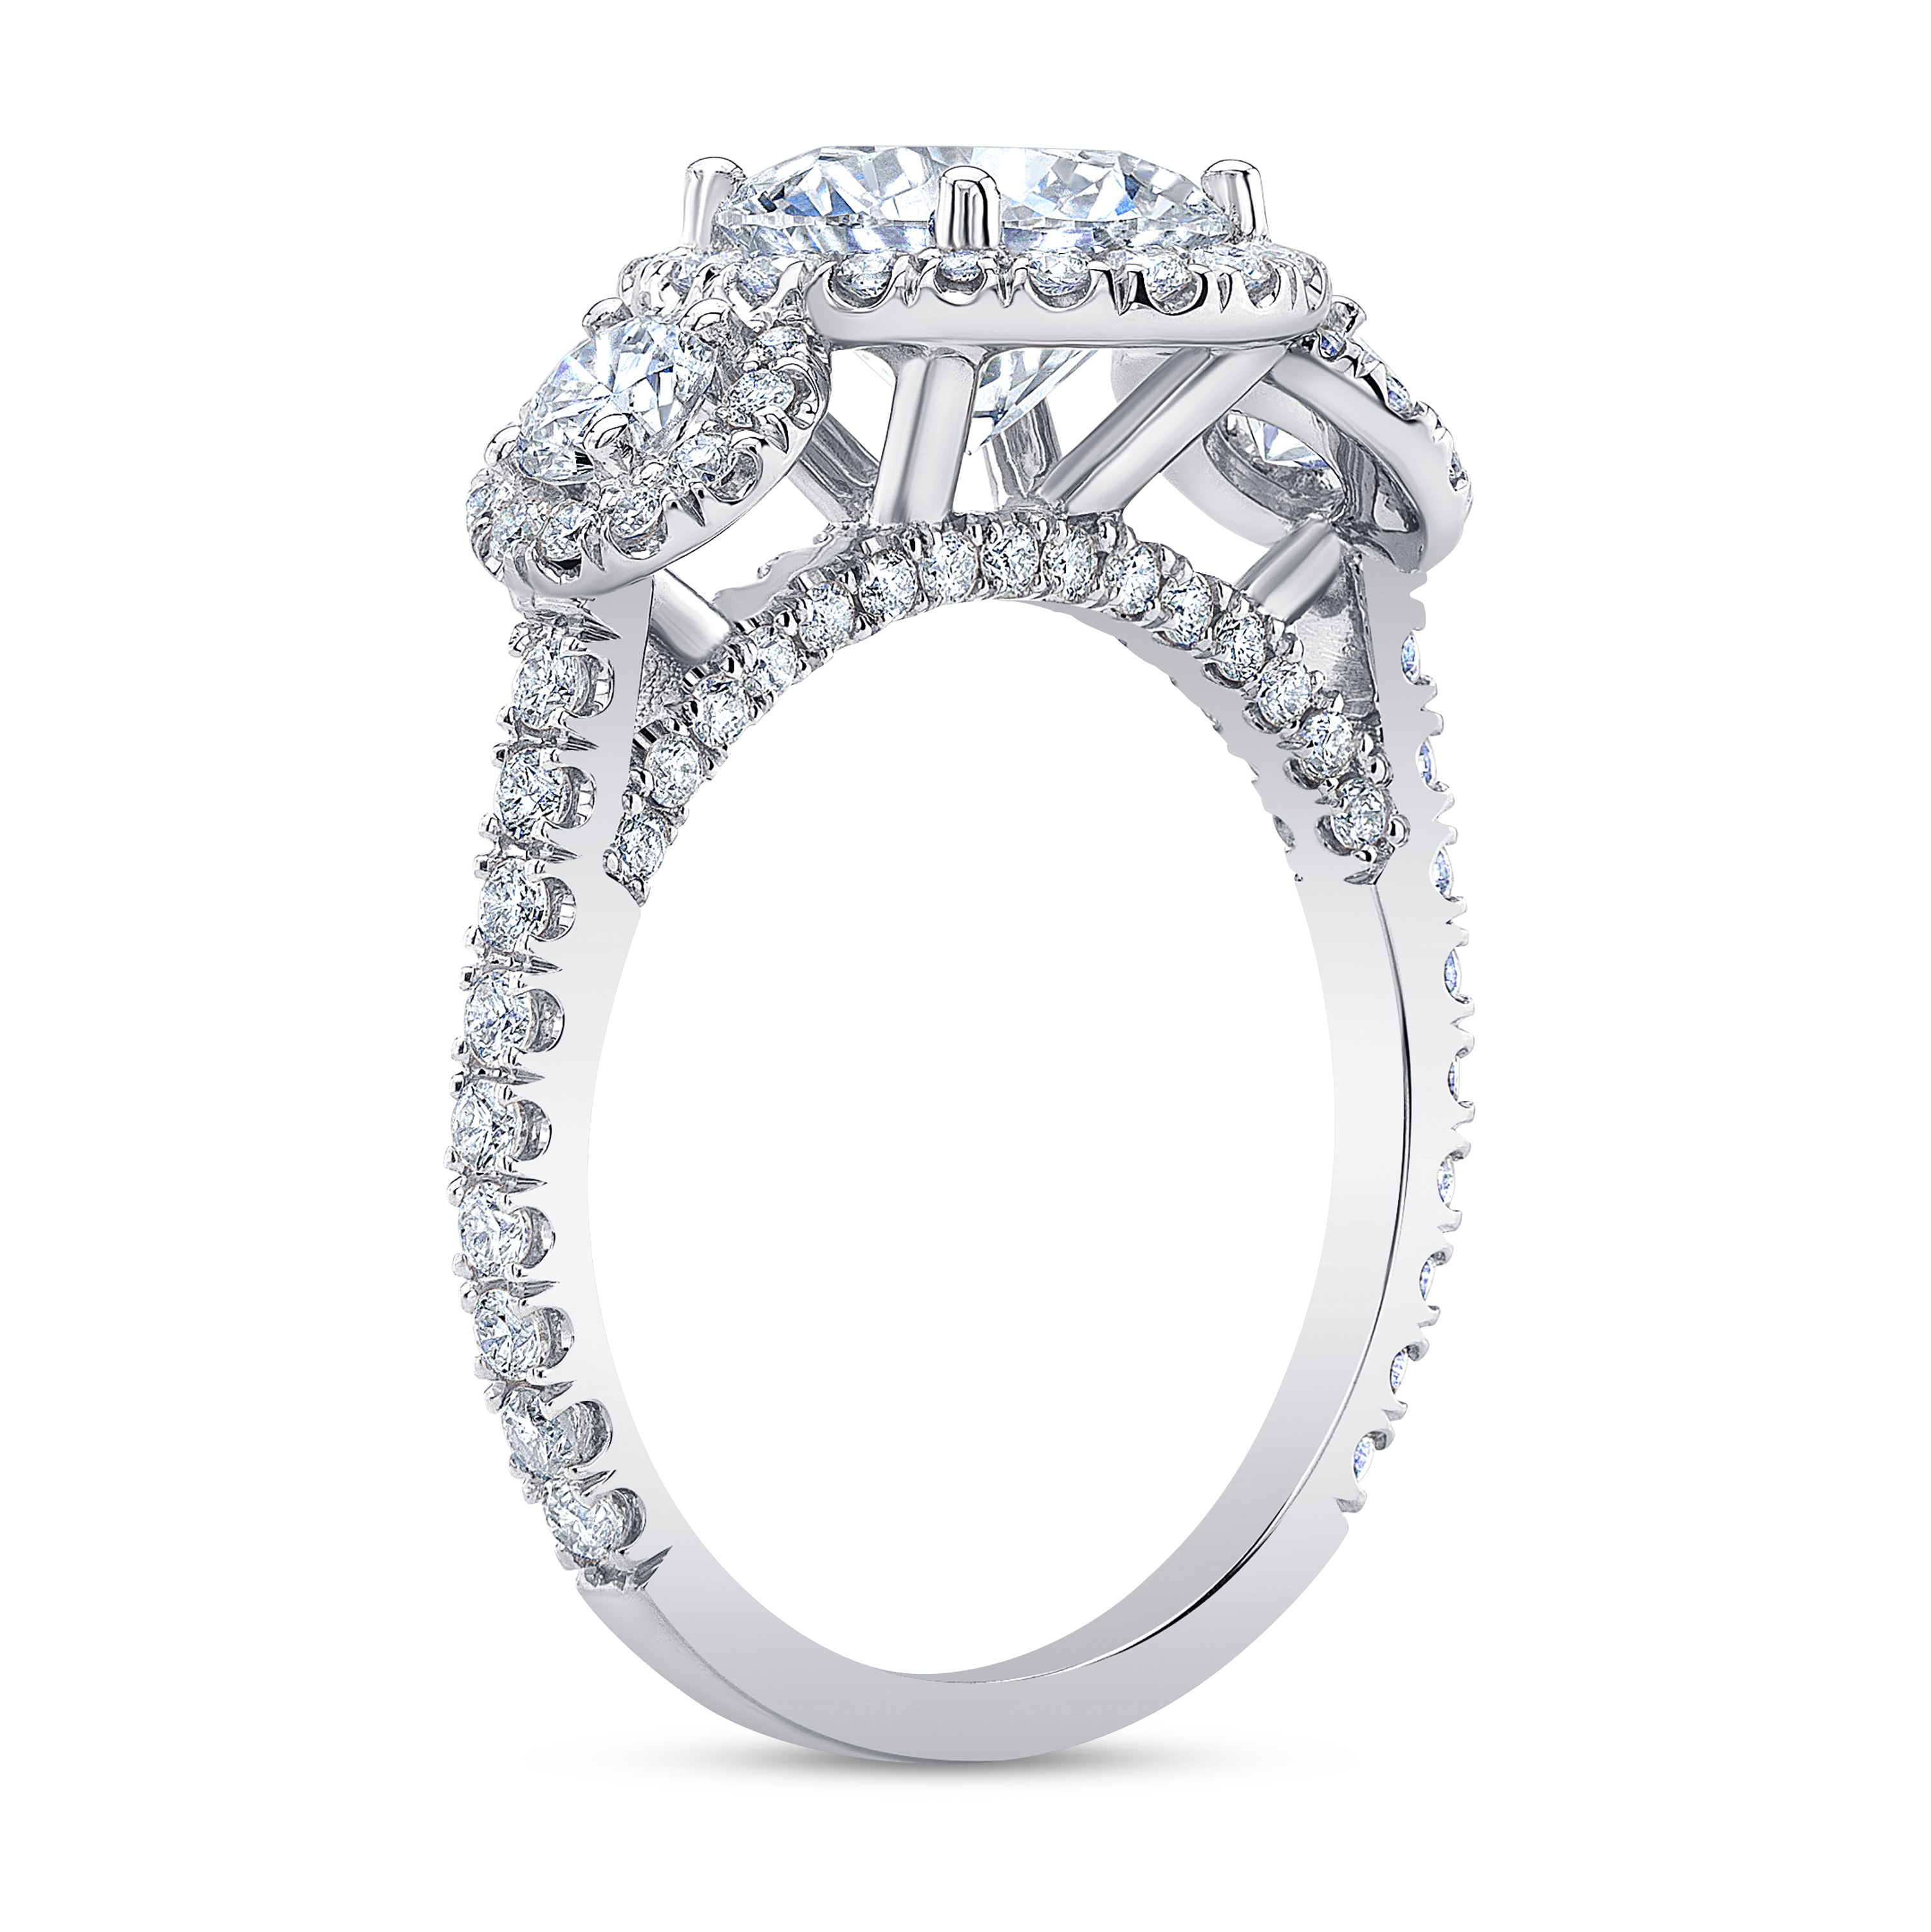 3 Stone Halo Pave Diamond Engagement Ring in platinum 